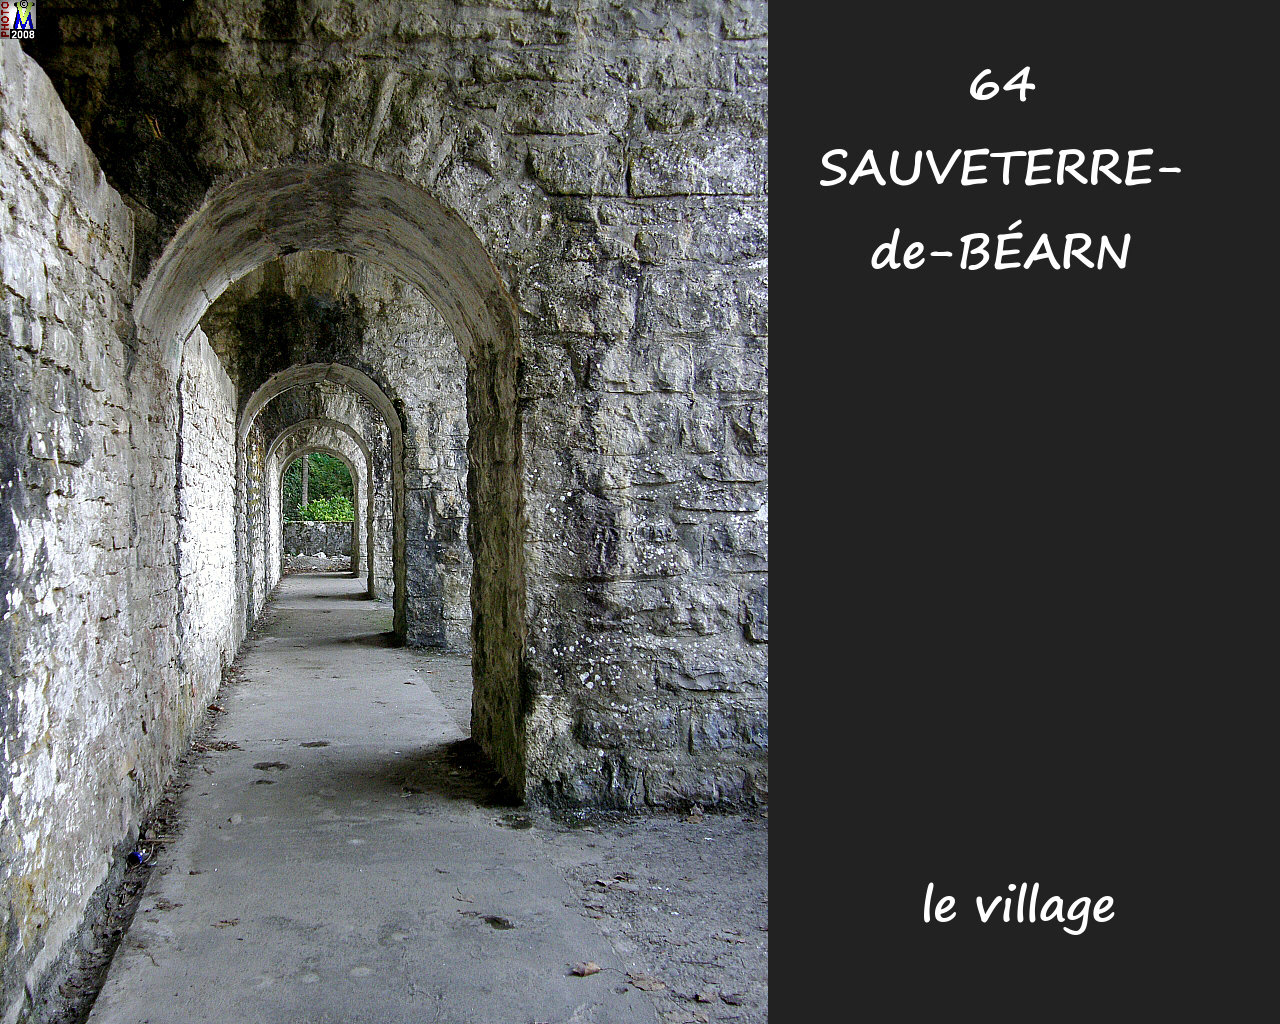 64SAUVETERRE-BEARN_village_106.jpg